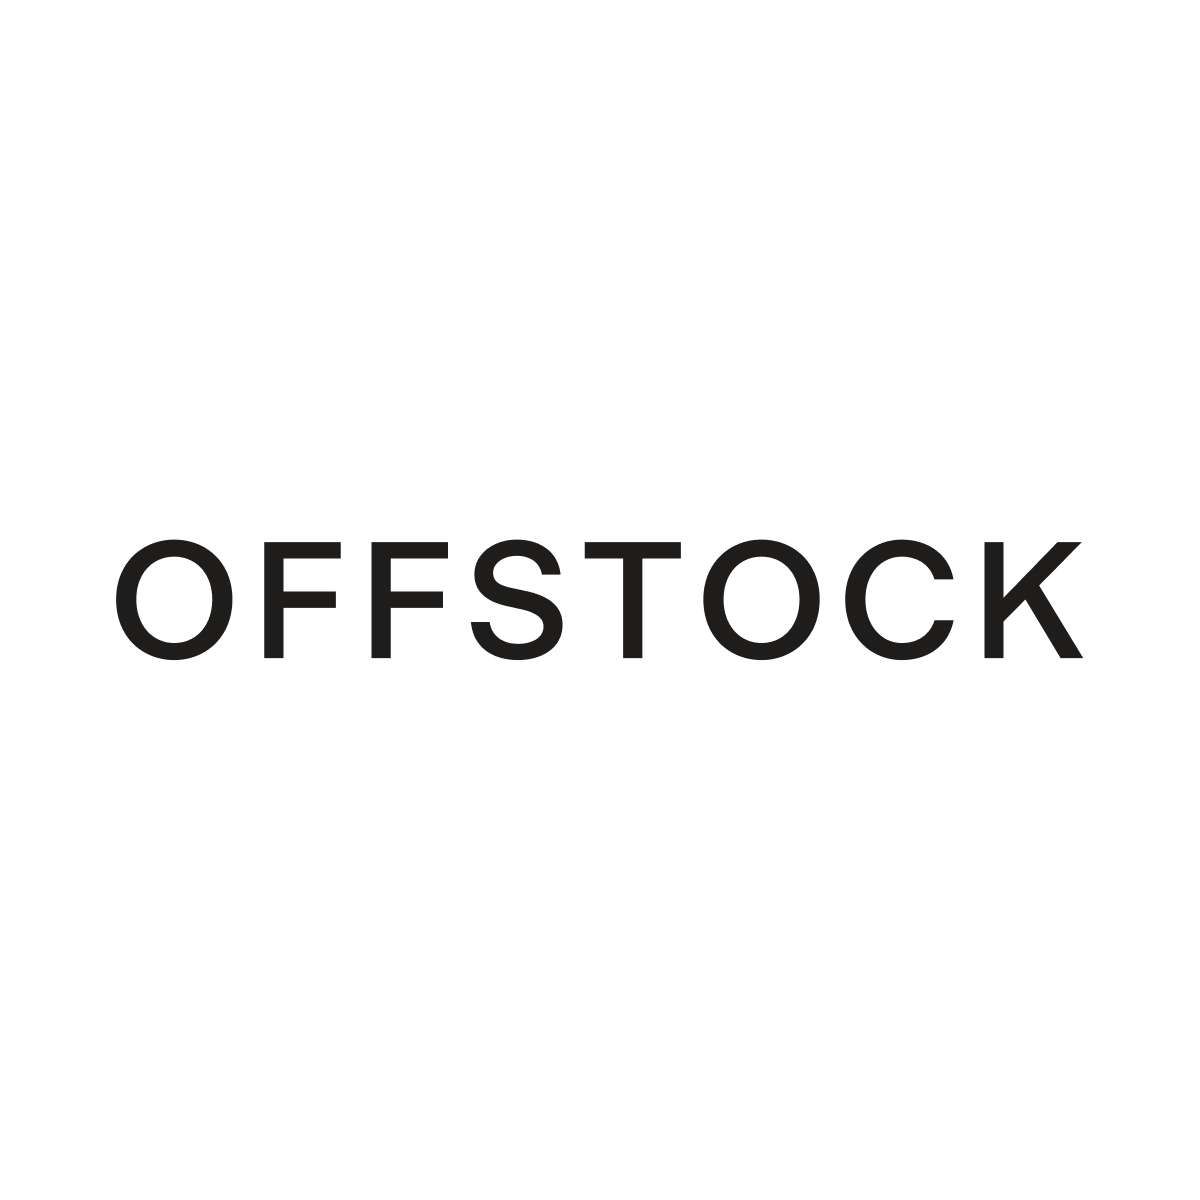 Offstock